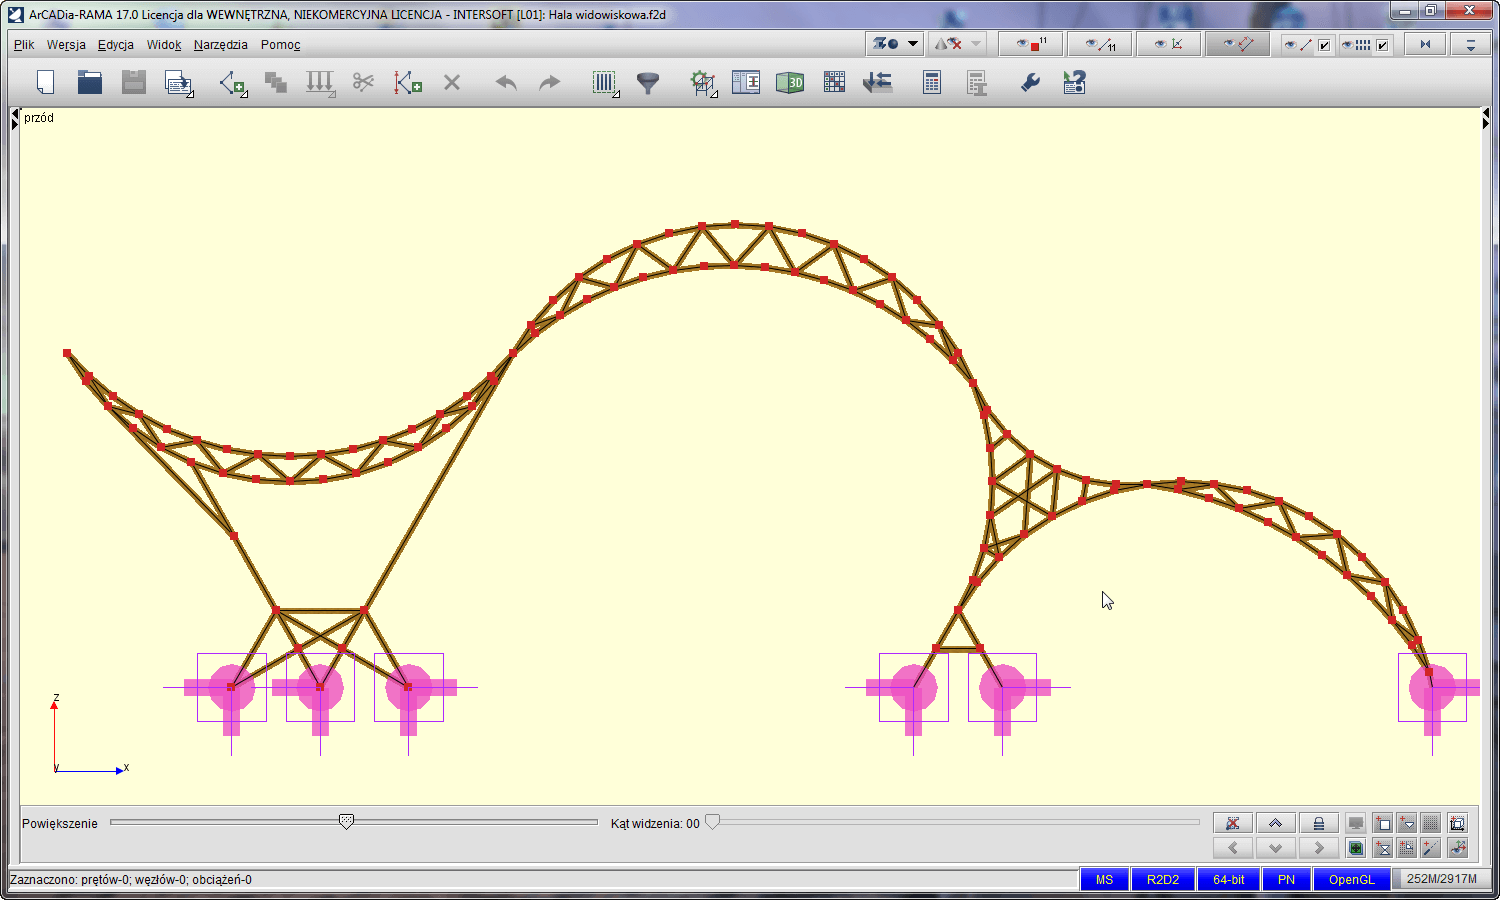 R2D2-InterDrewno | INTERsoft program CAD